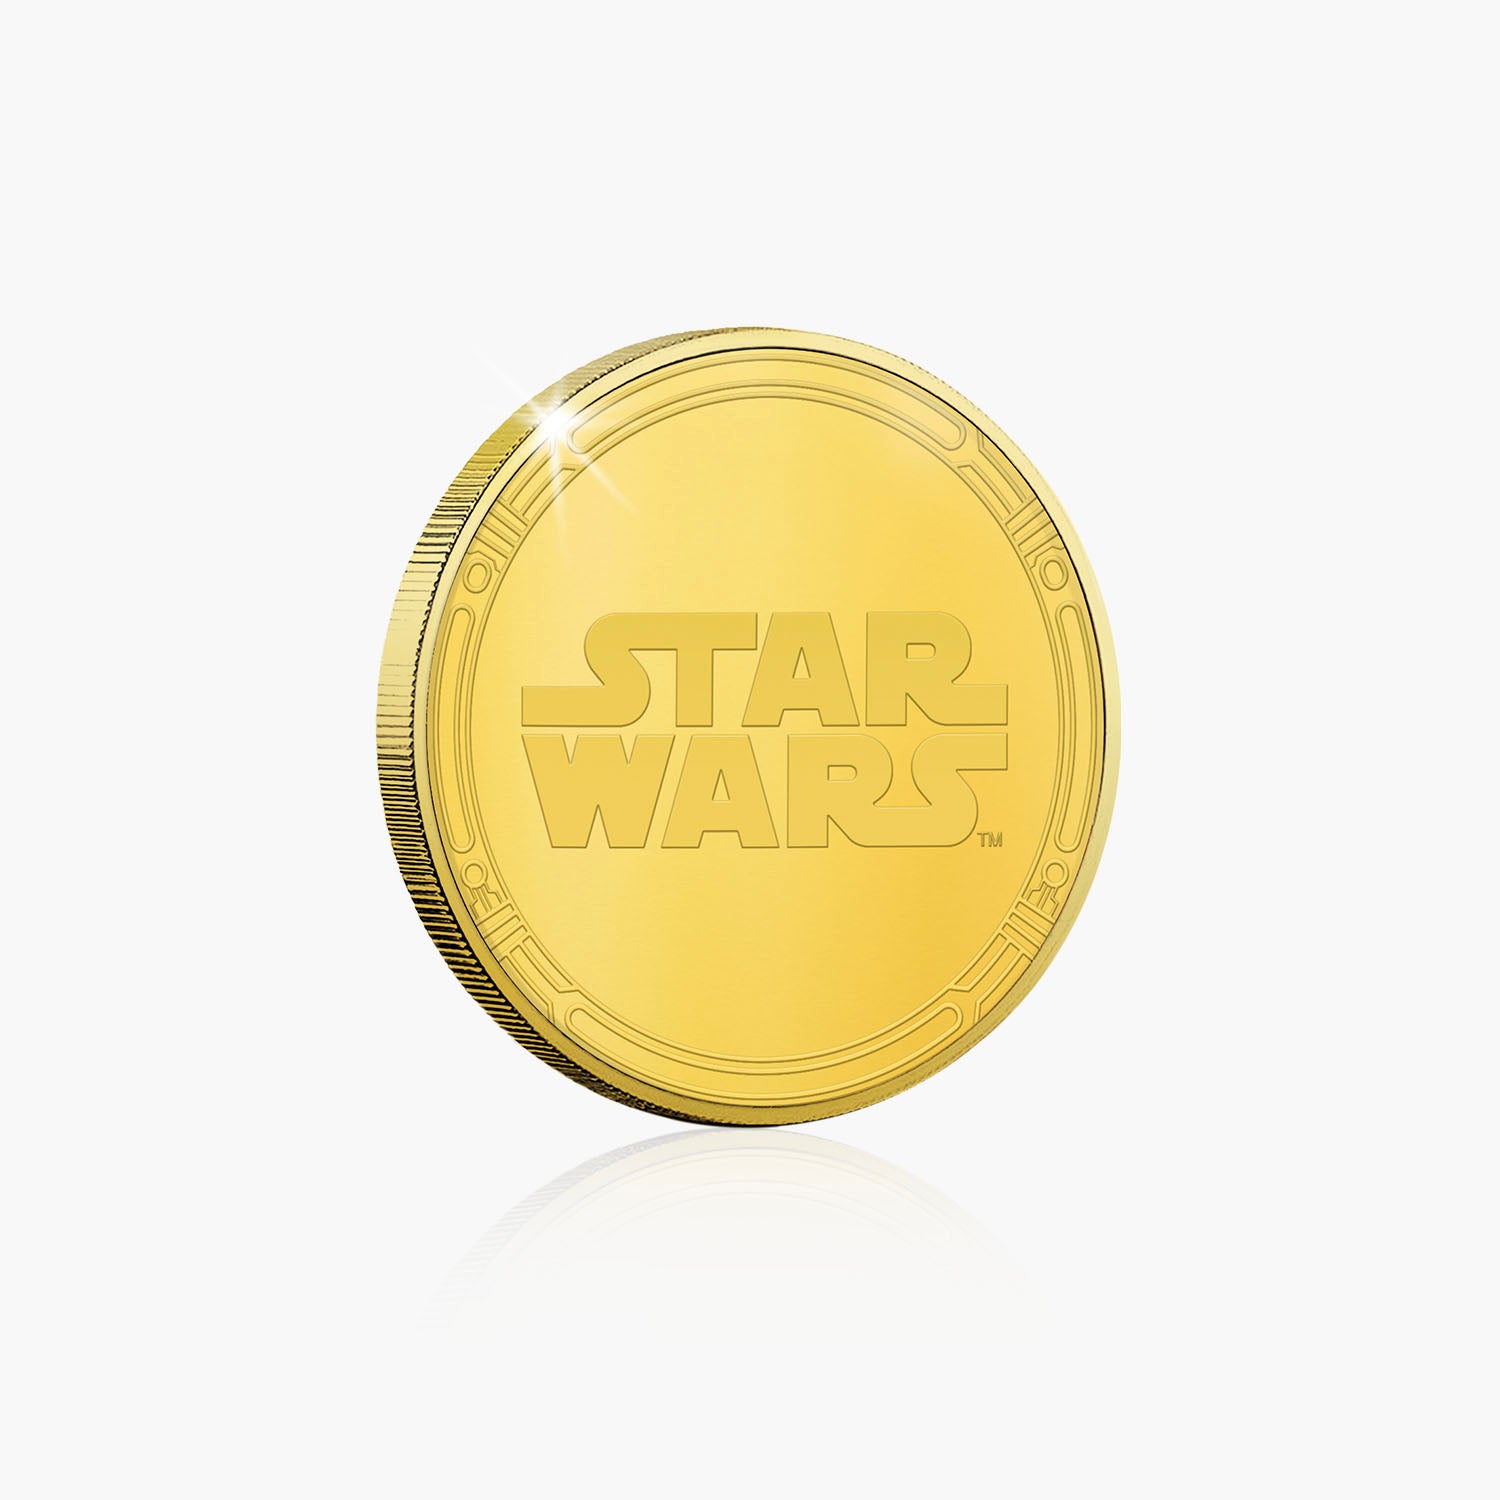 Empire Strikes Back Gold Plated Commemorative